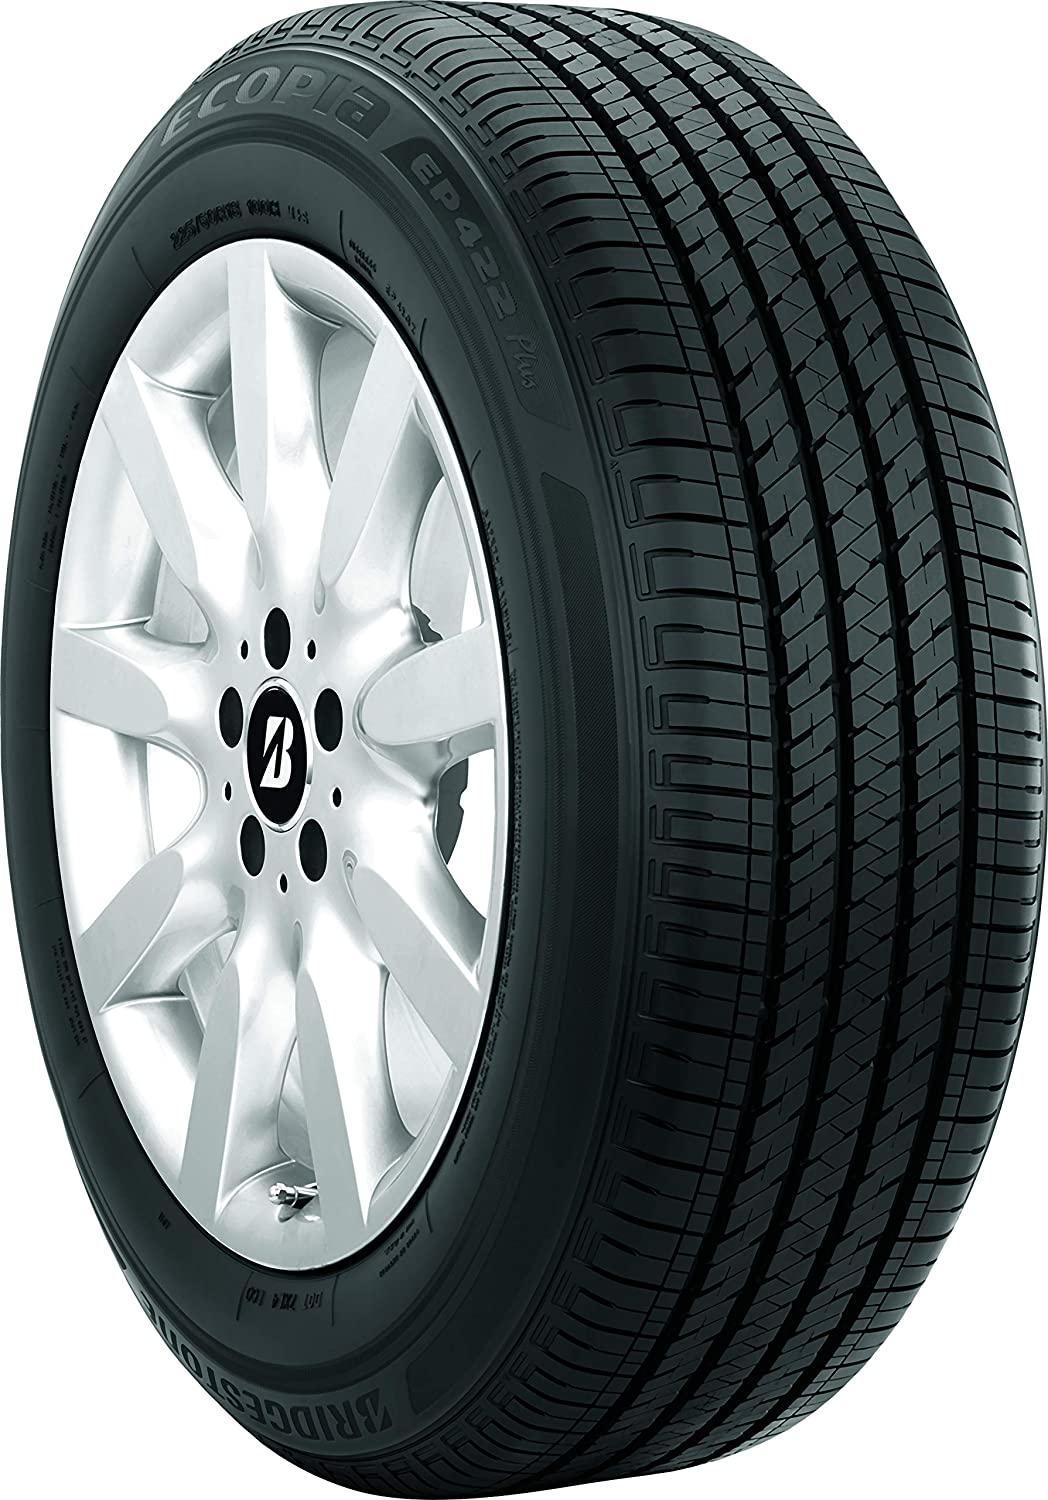 Bridgestone Ecopia EP422 Plus Review Truck Tire Reviews